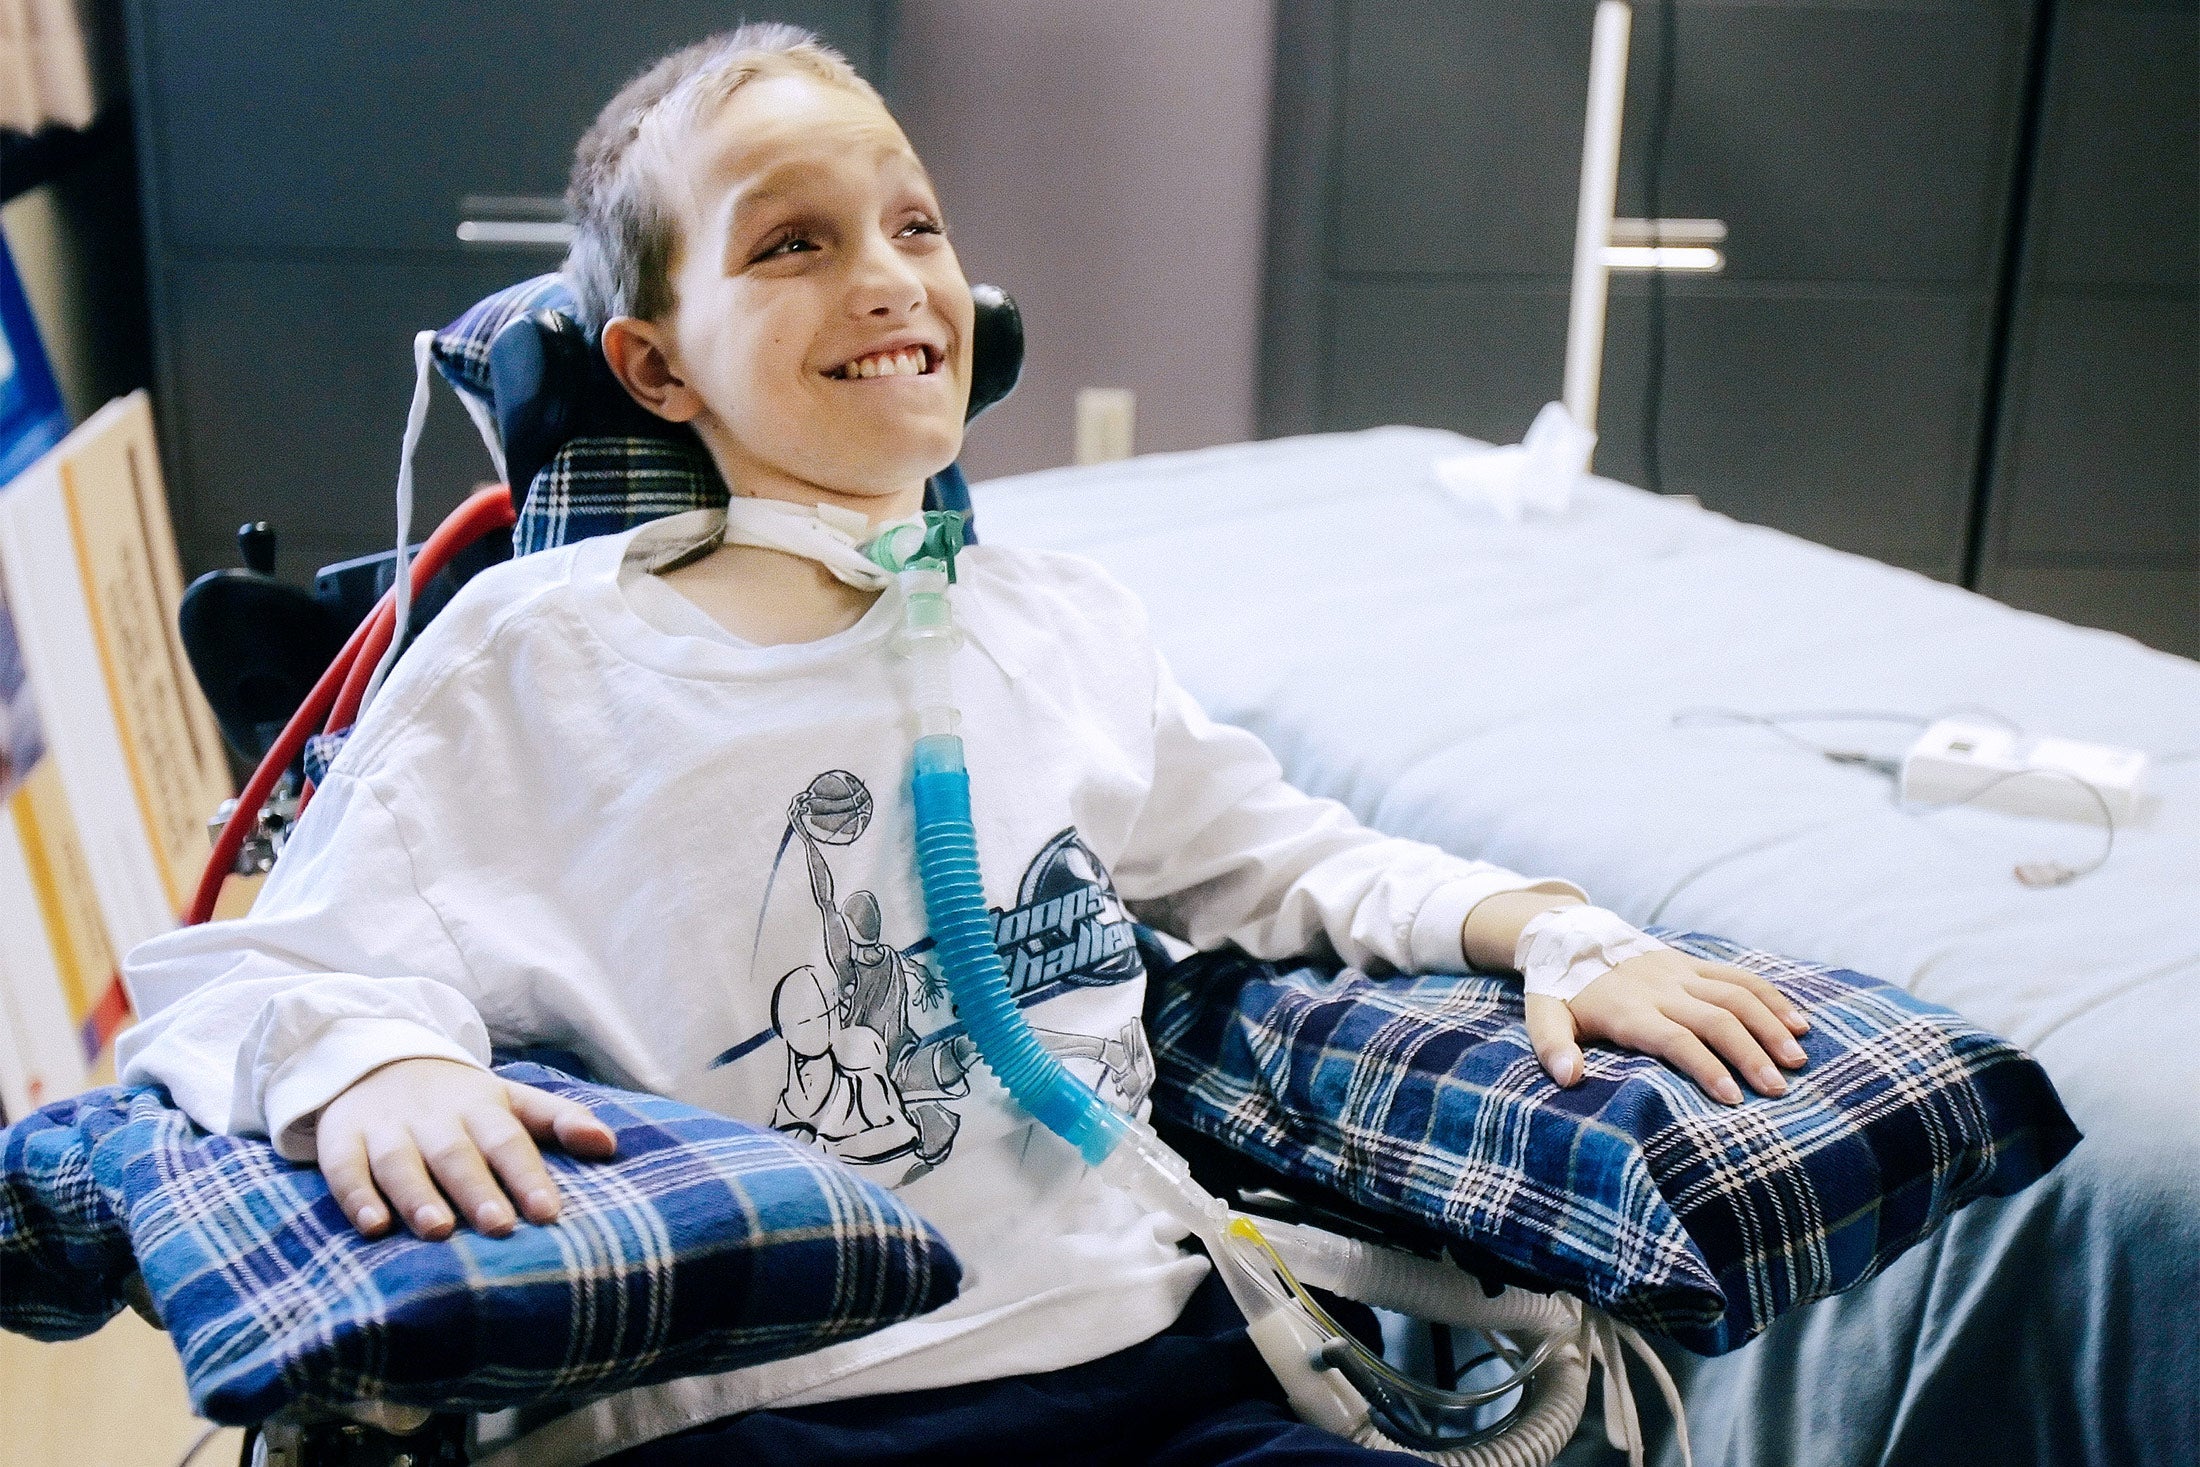 Alex Malarkey smiling in a hospital room.